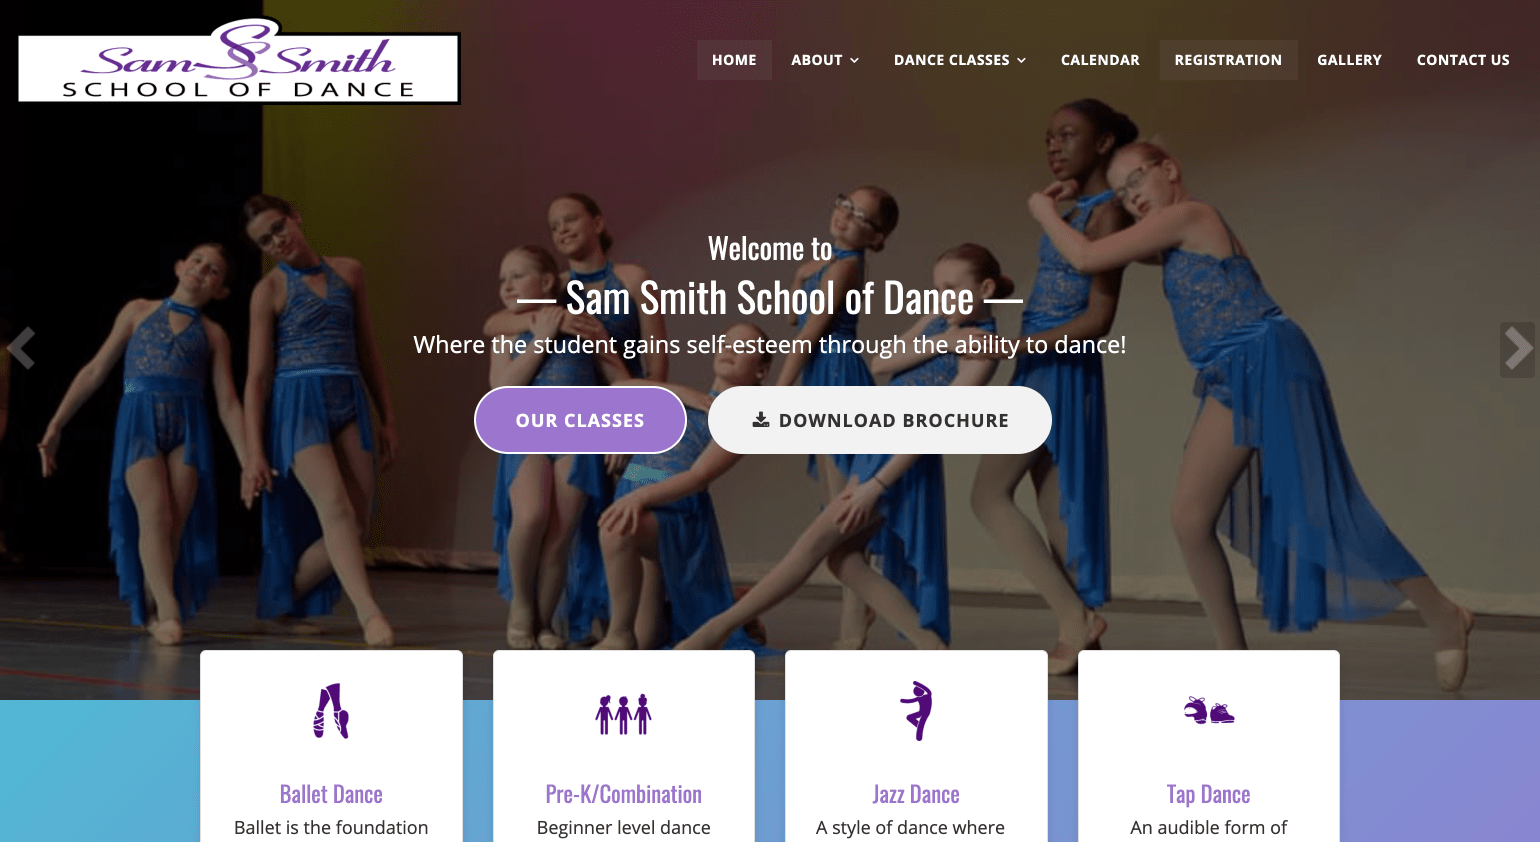 Sam Smith School of Dance